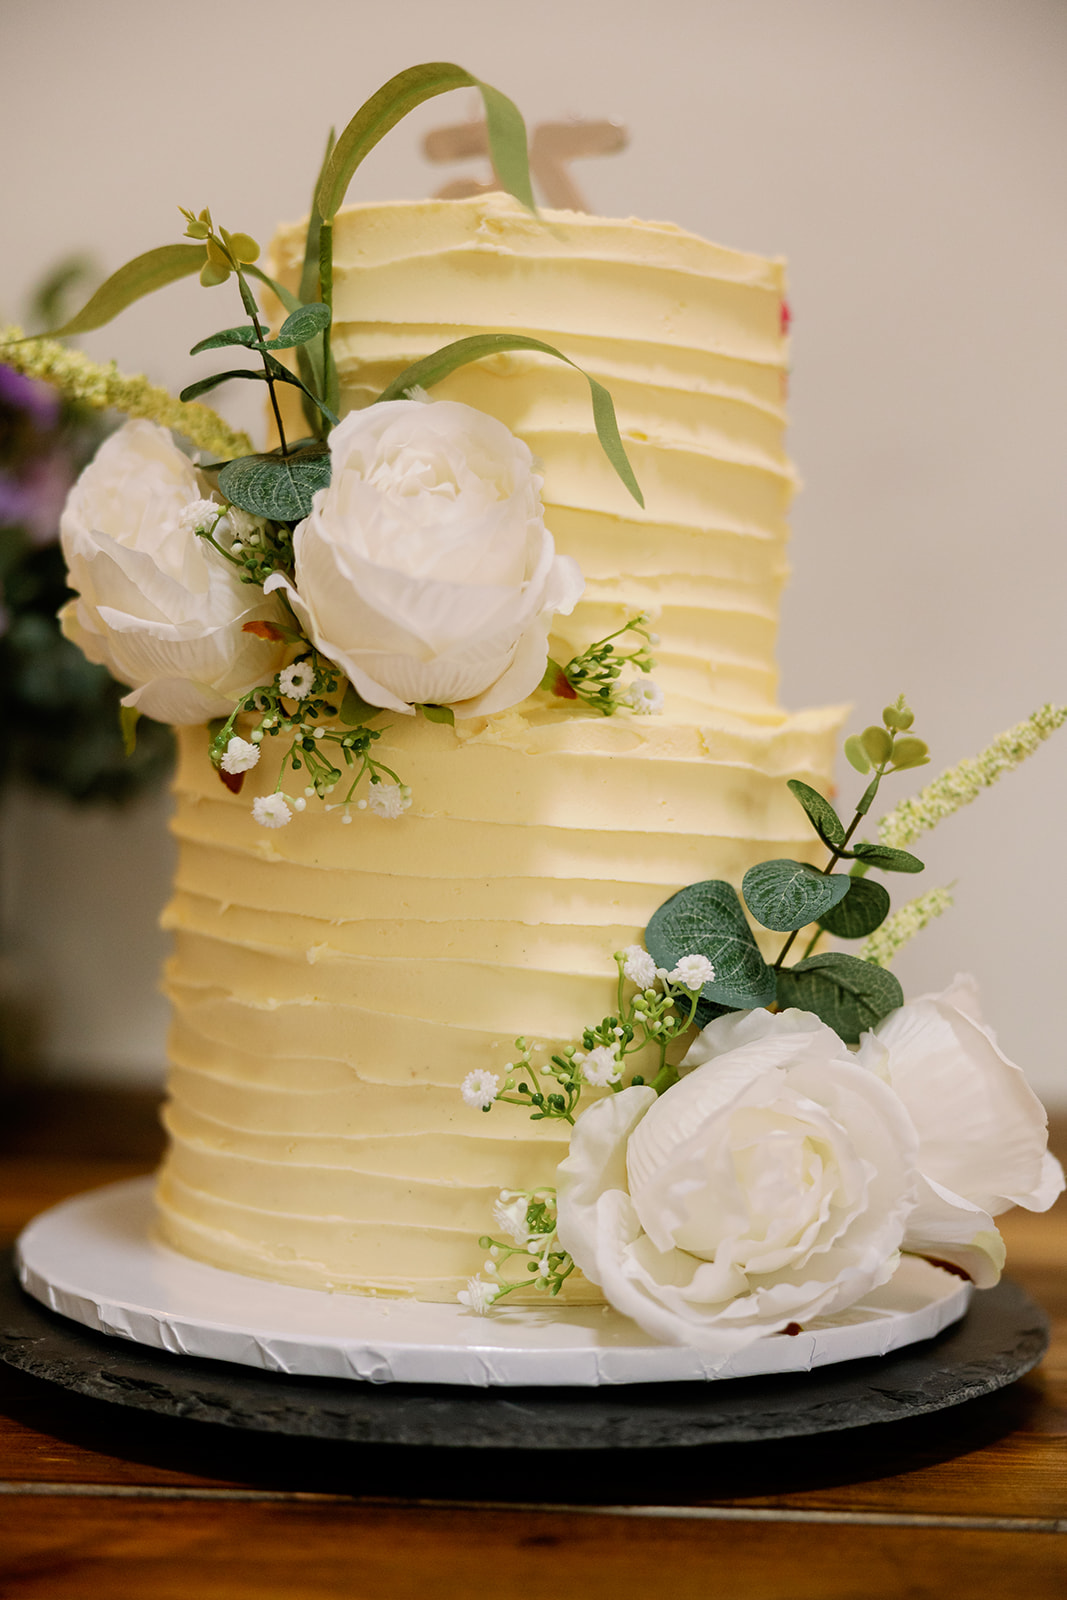 a dual birthday and wedding cake